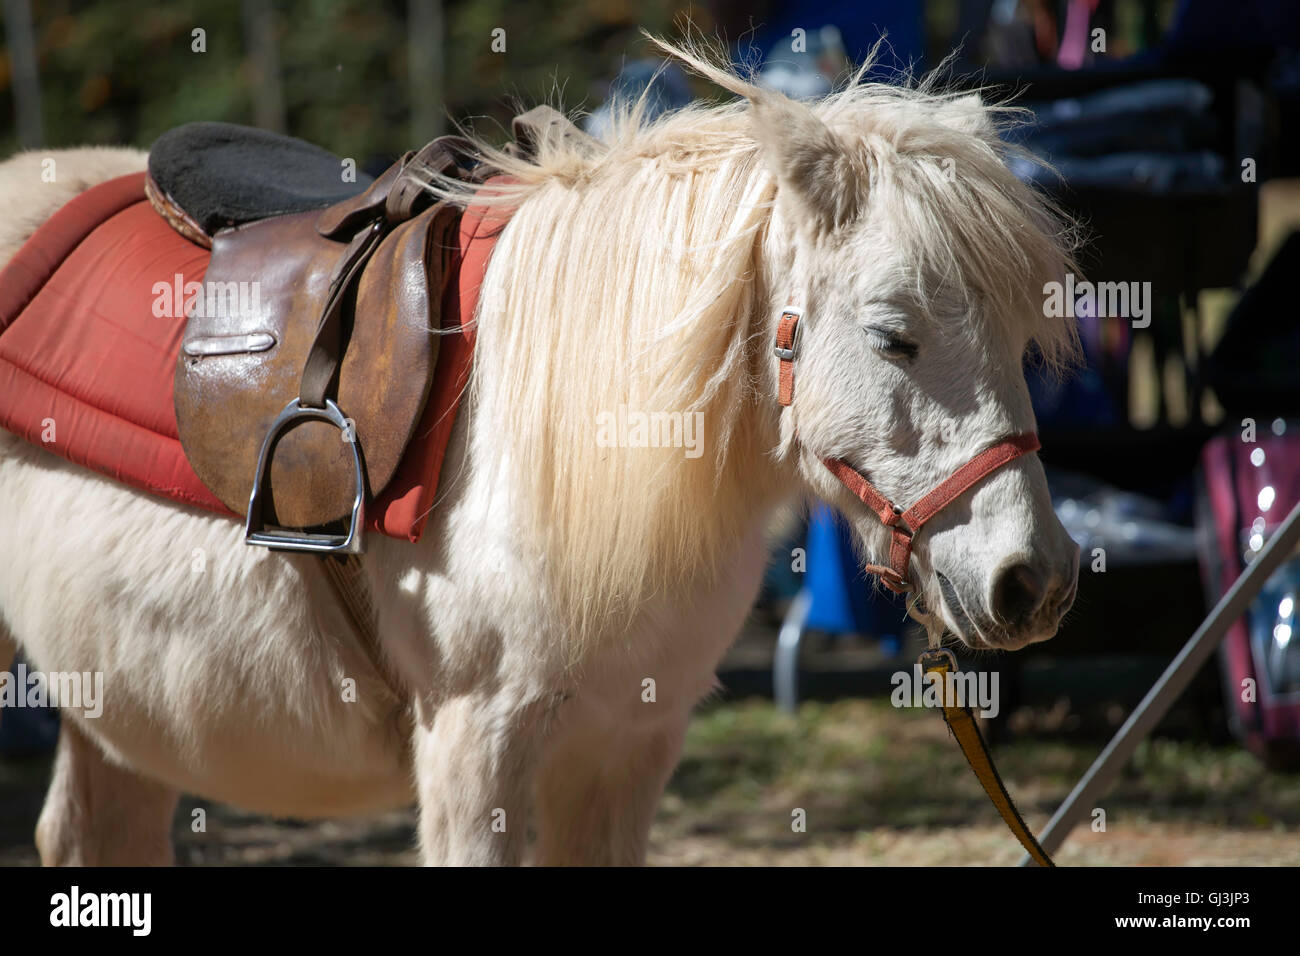 White Pony with Saddle and bridle Stock Photo